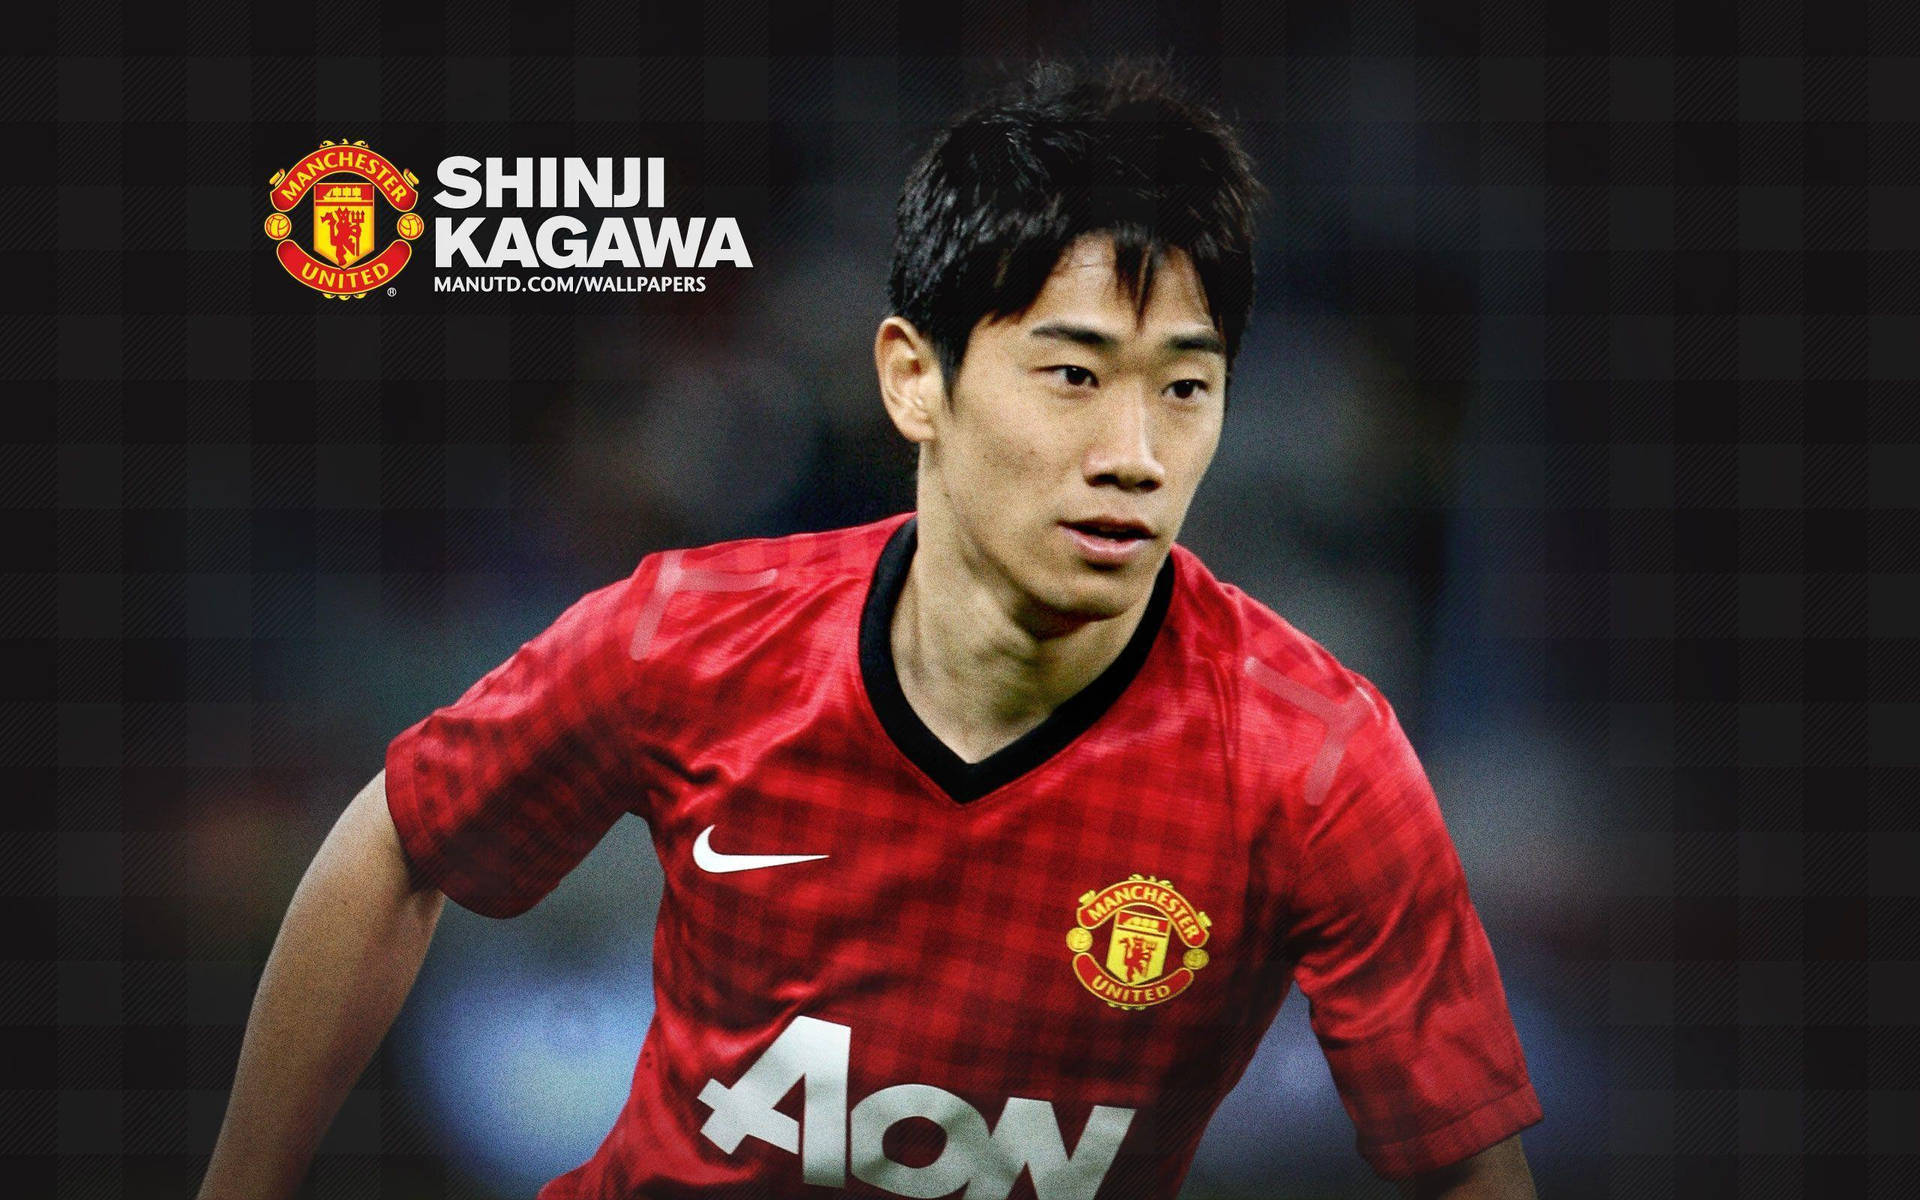 Manchester United Players Spotlight: Shinji Kagawa Wallpaper